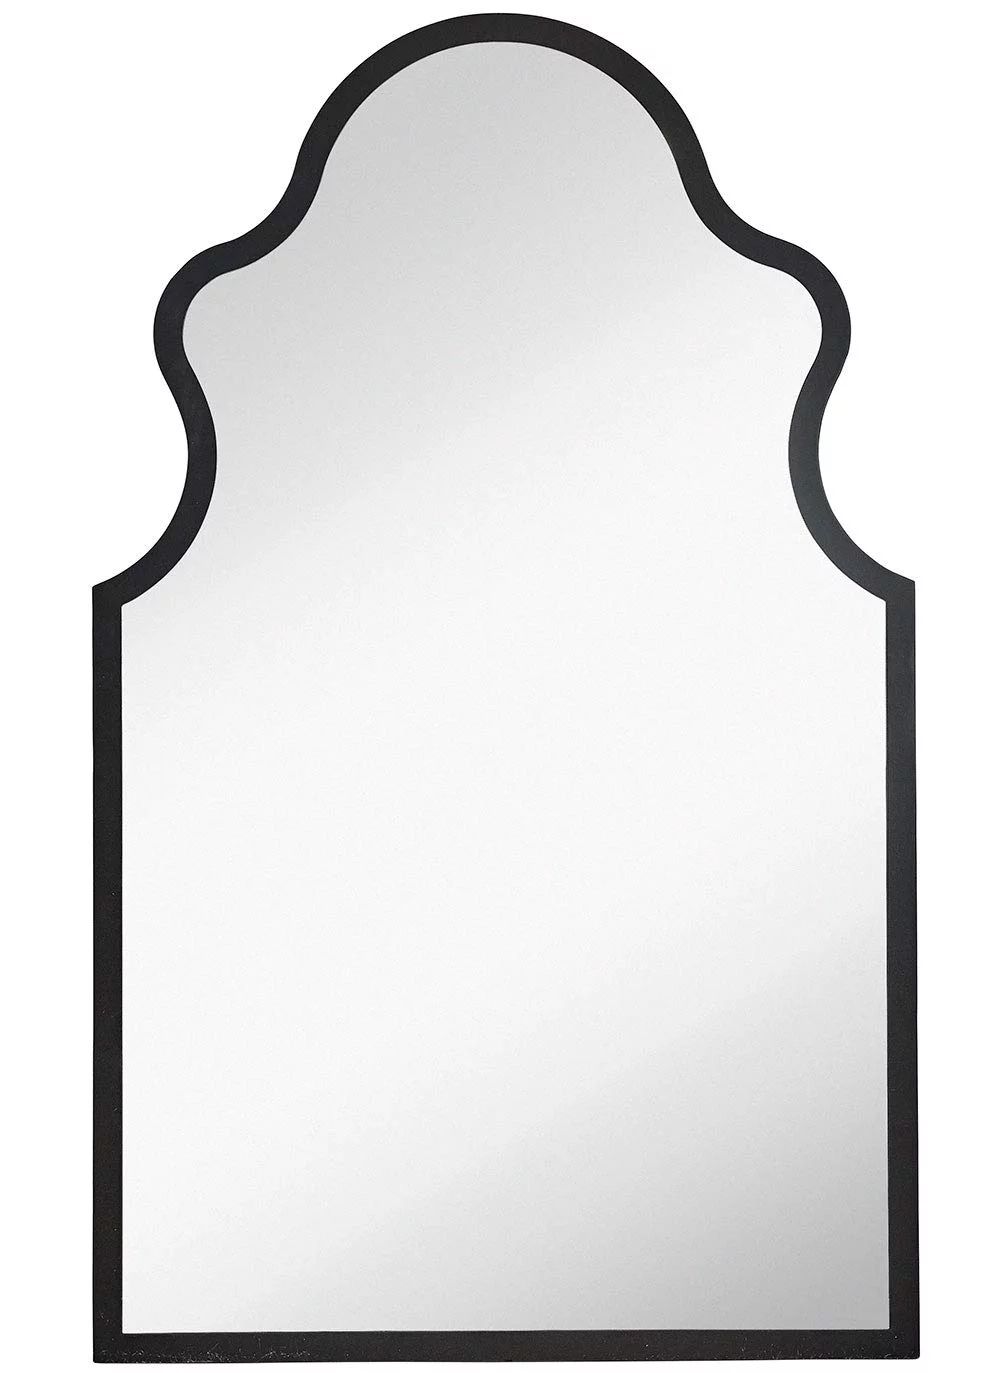 Hamilton Hills Arched Mirror Black Framed Wall Mirror with Queen Anne Design 22" x 36" | Walmart (US)